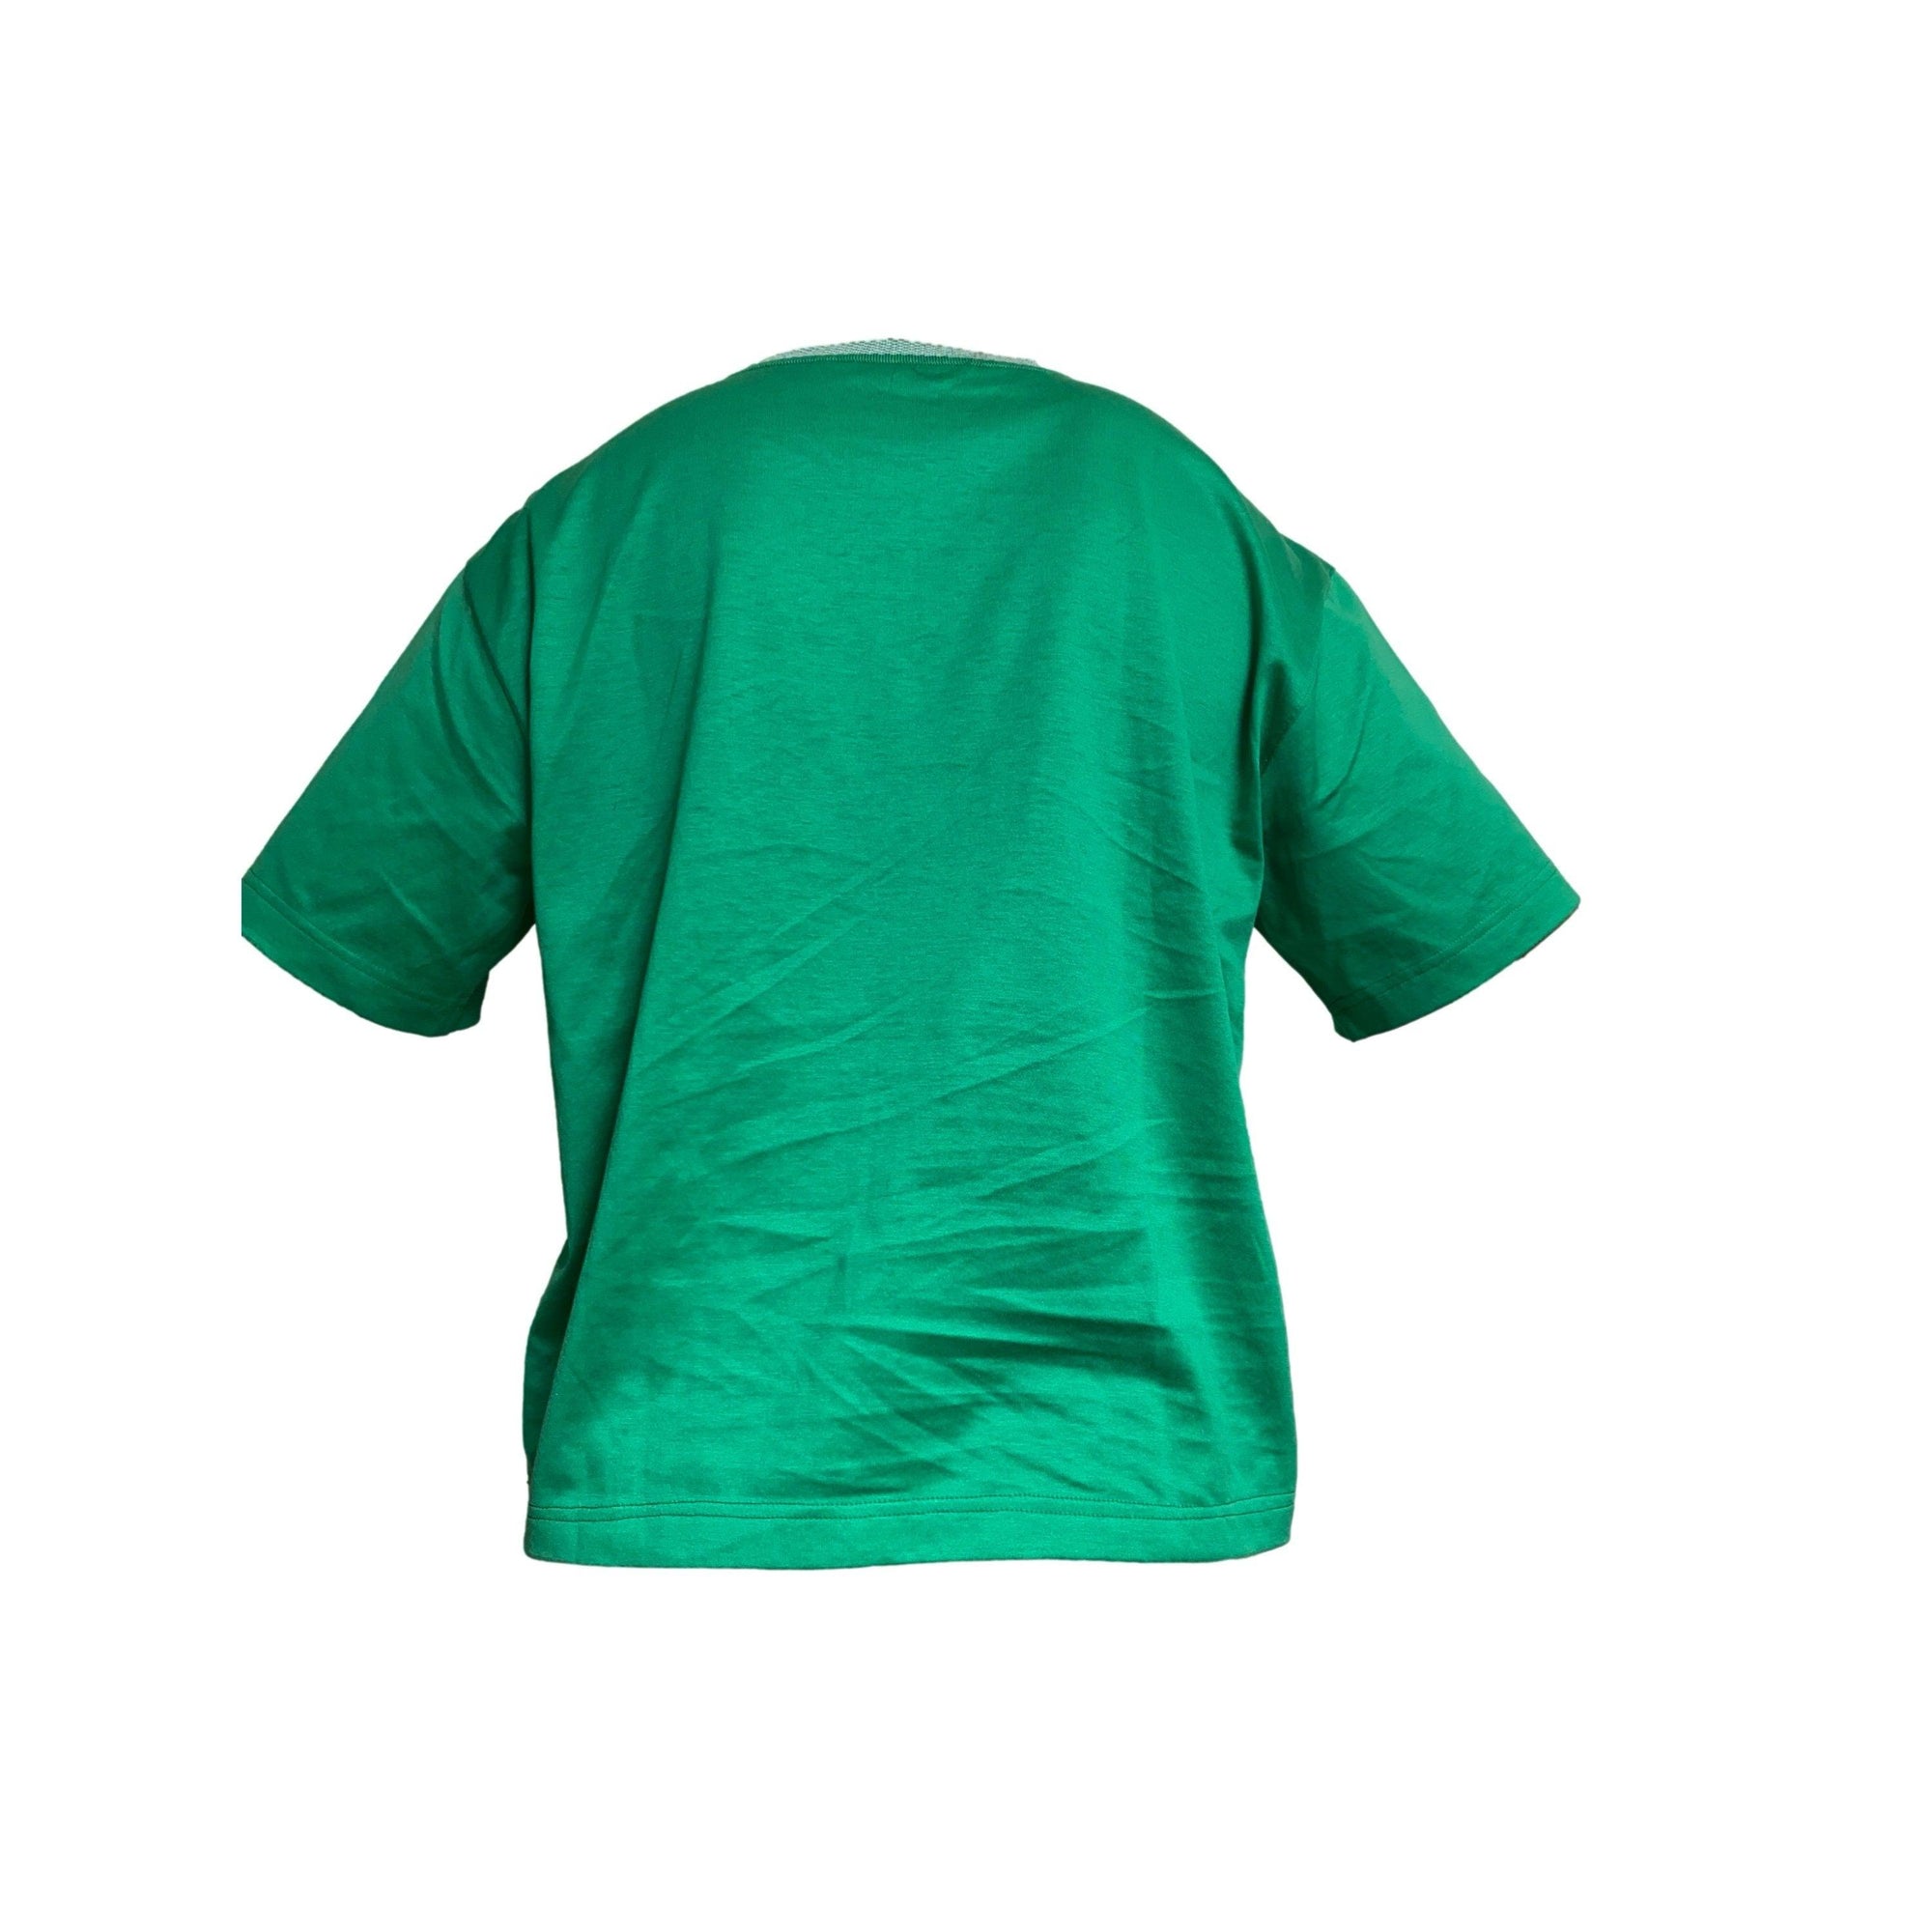 Dior Sport Green T-Shirt - Apparel